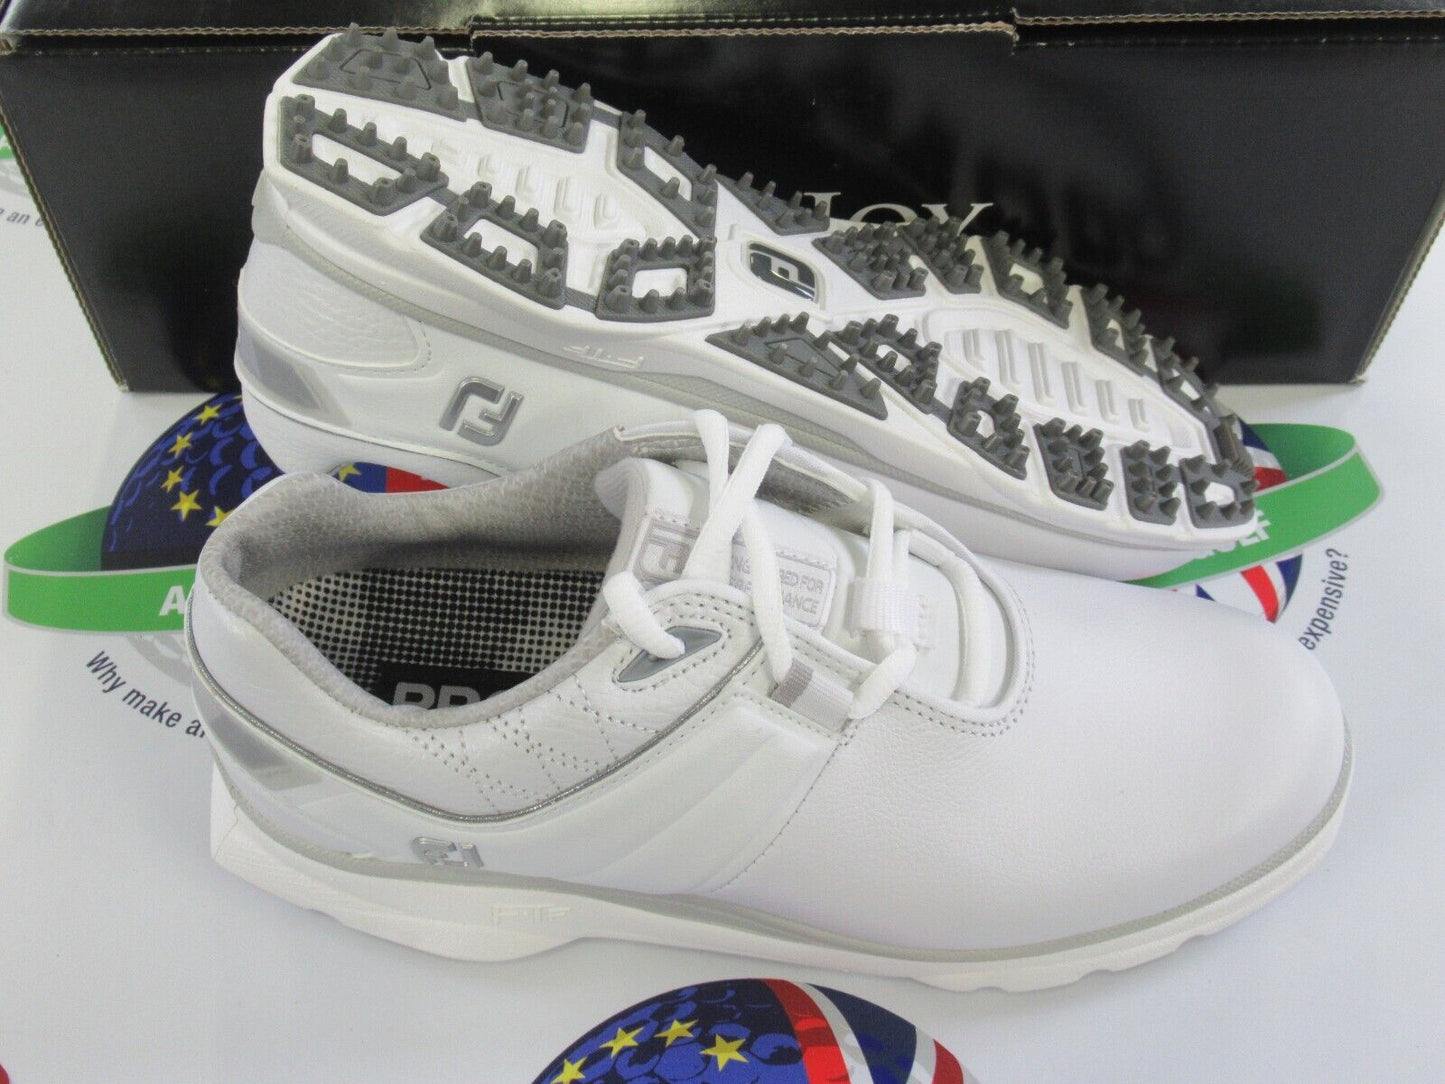 footjoy pro sl womens golf shoes white/silver uk size 4.5 wide/large